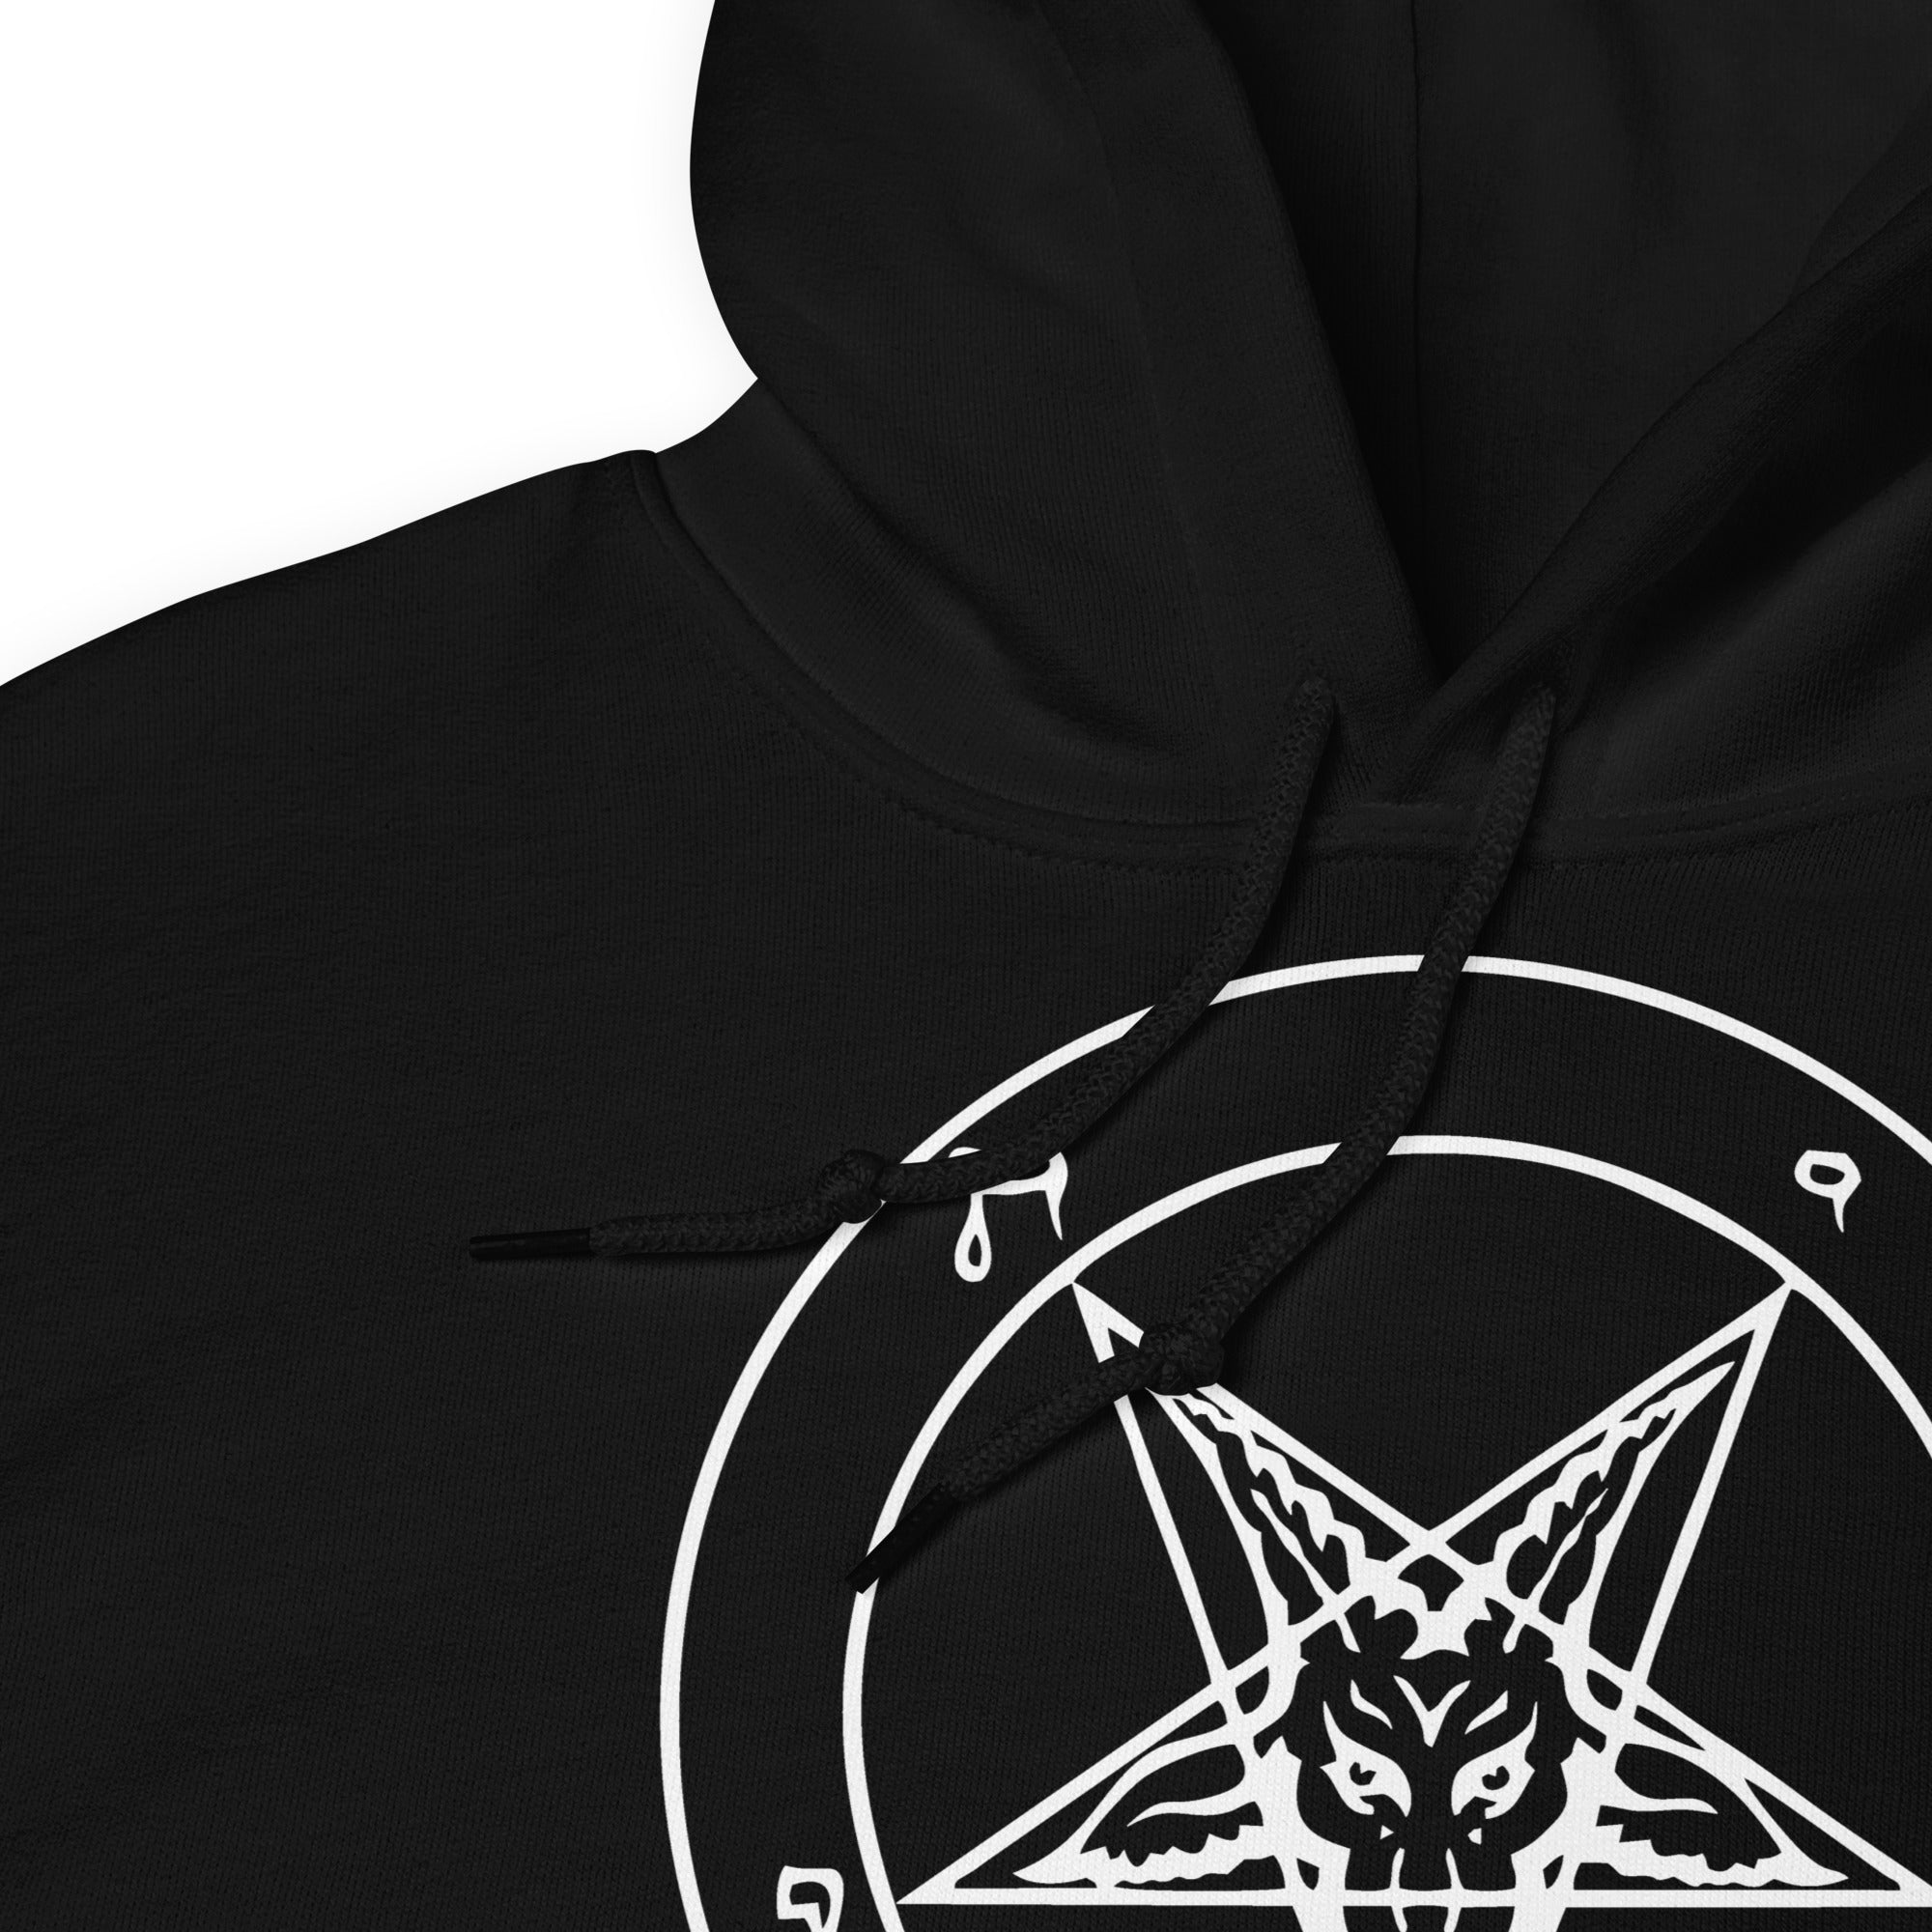 Sigil of Baphomet Occult Symbol on Black Men's Hoodie Sweatshirt - Edge of Life Designs